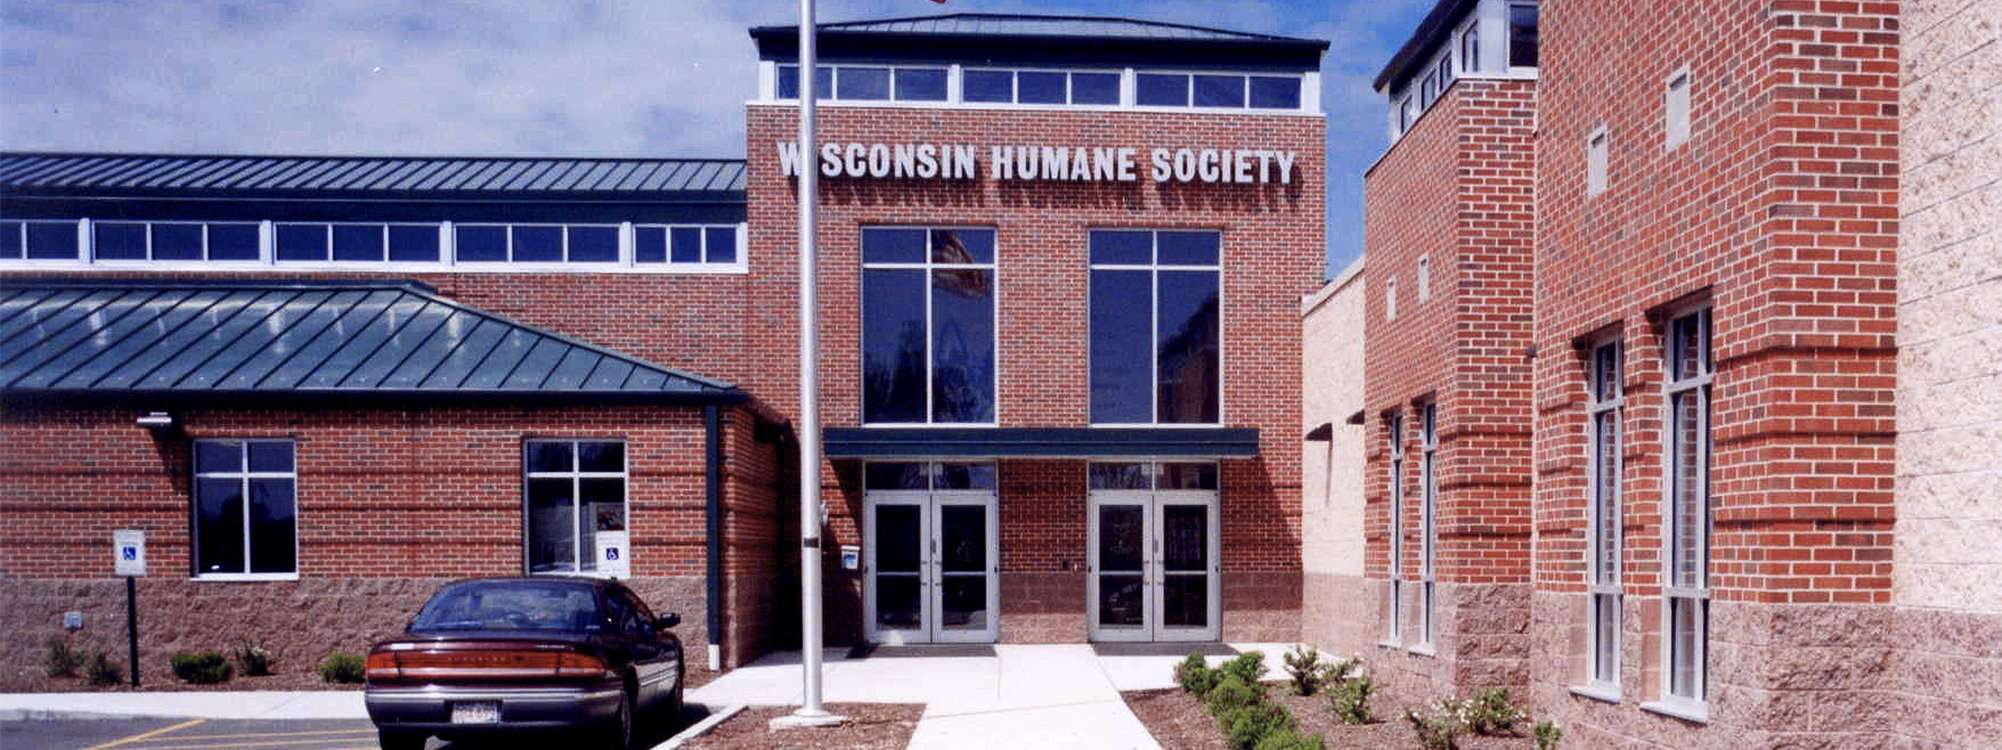 Wisconsin Humane Society_Banner